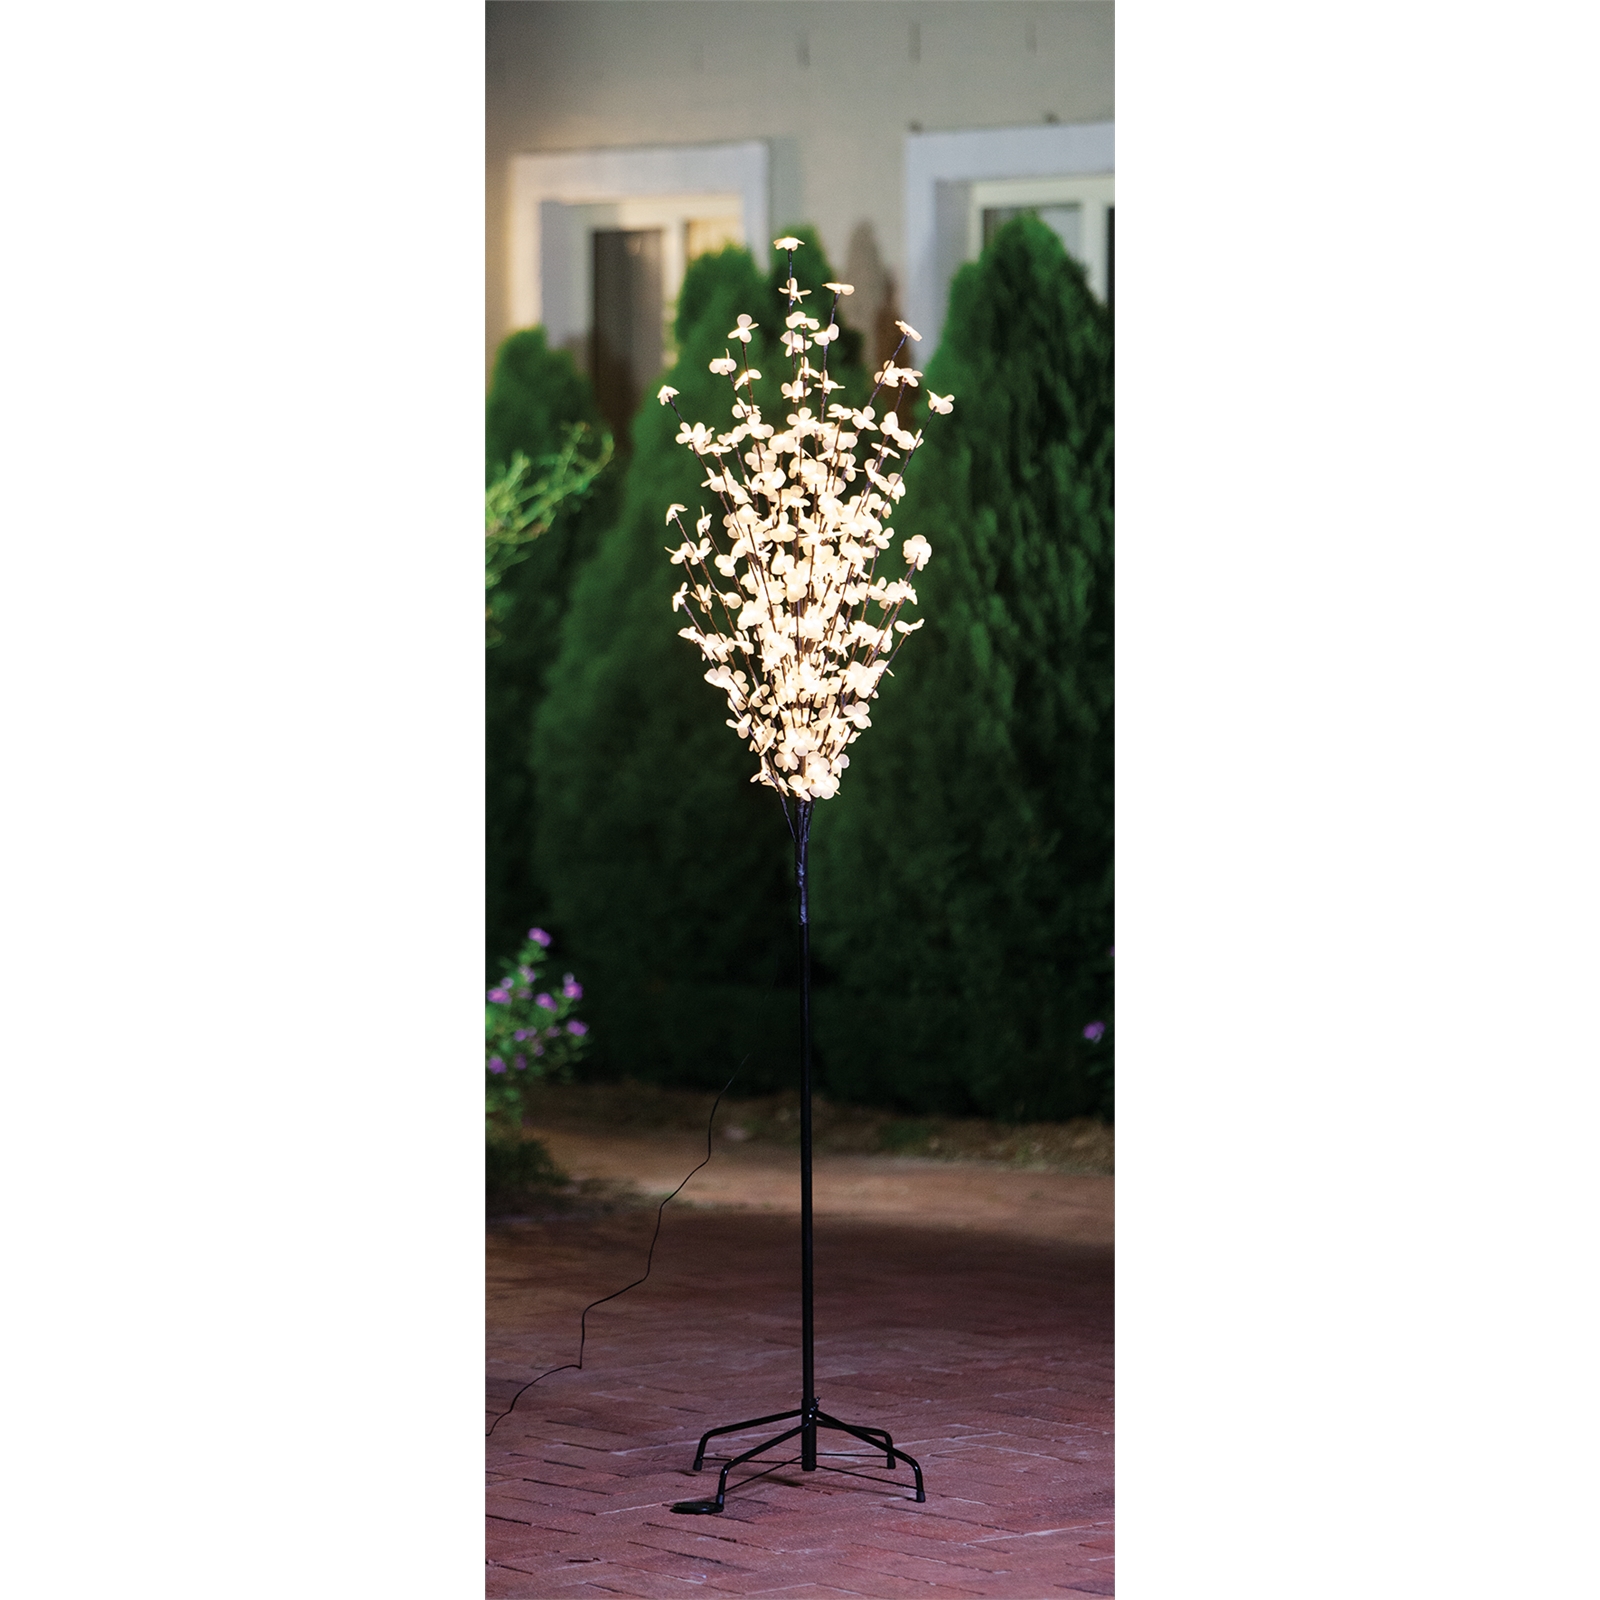 Lytworx 1.8m 200 LED Warm White Festive Light Lotus Tree